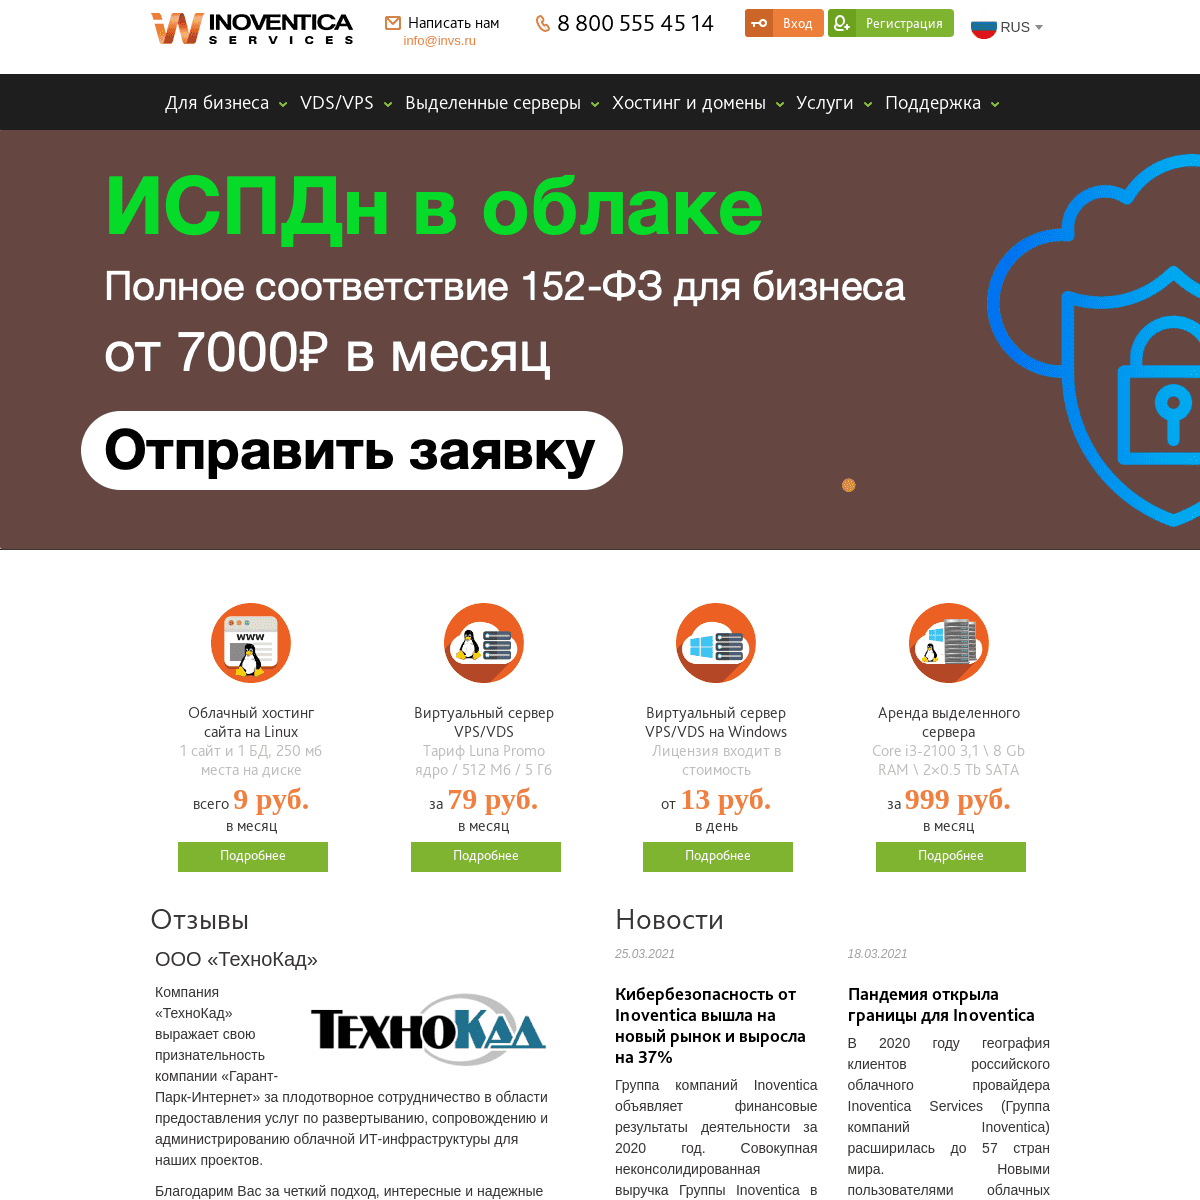 A complete backup of https://parking.ru